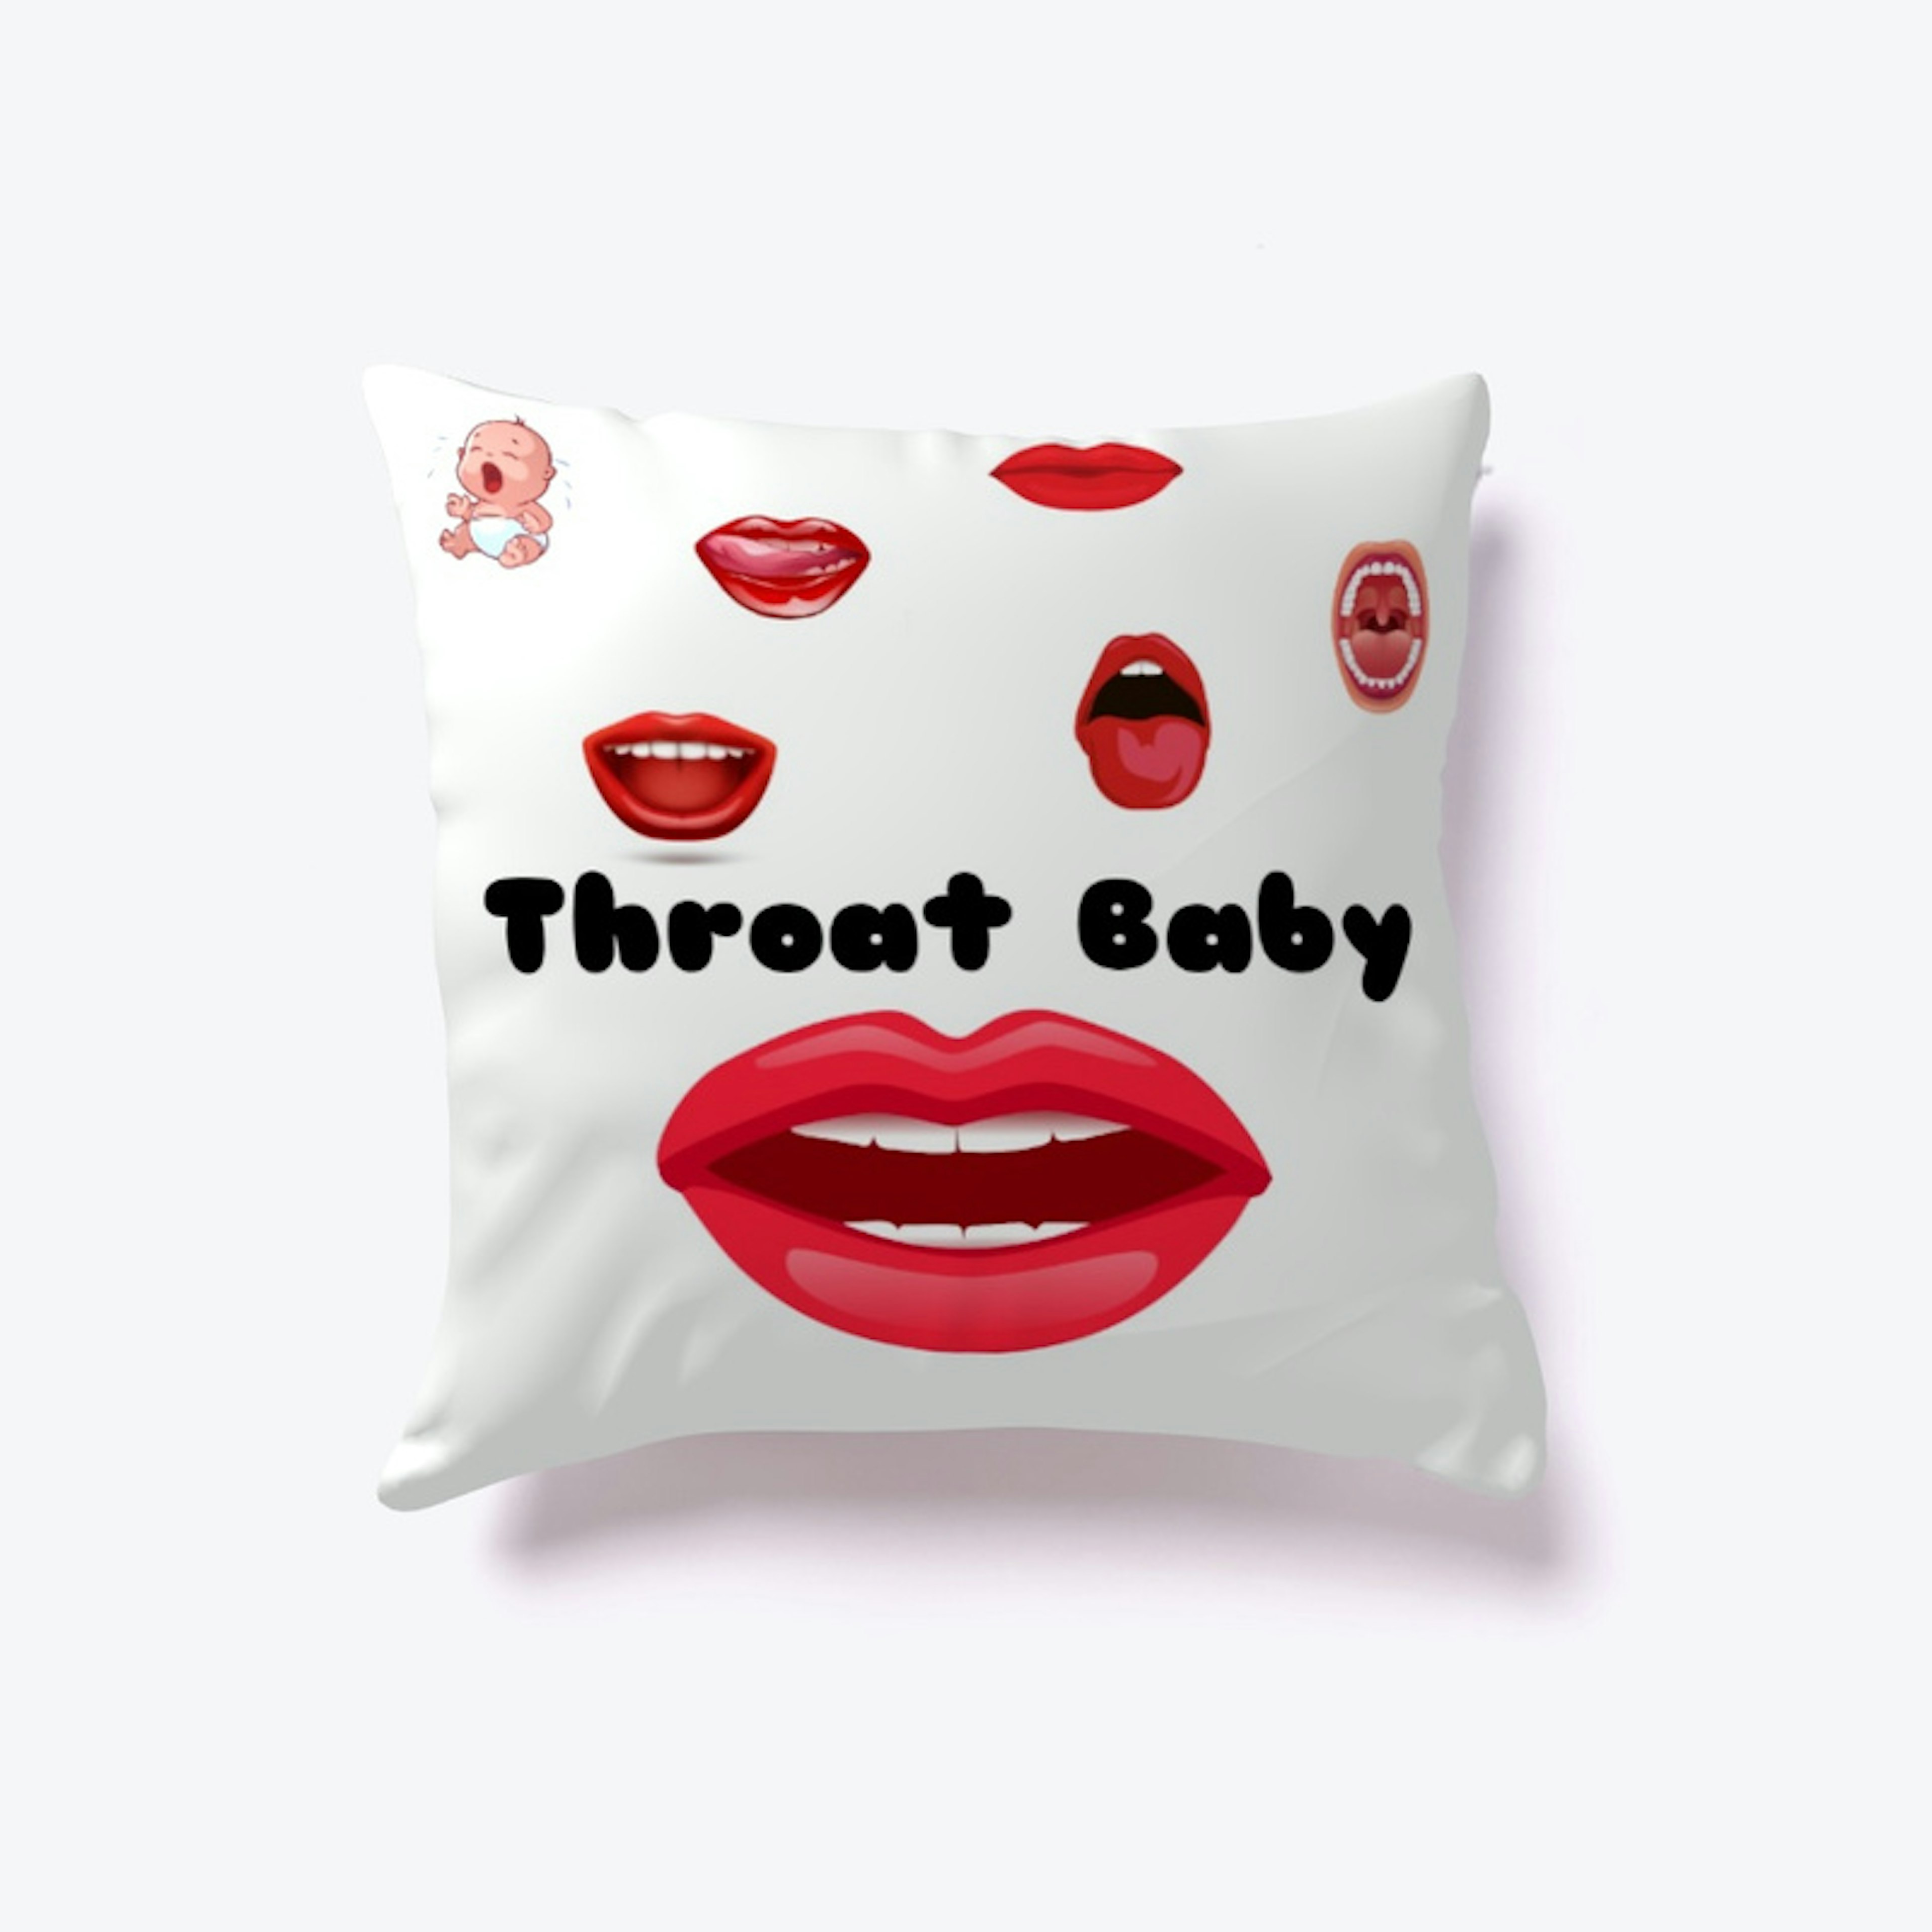 Throat baby pillow